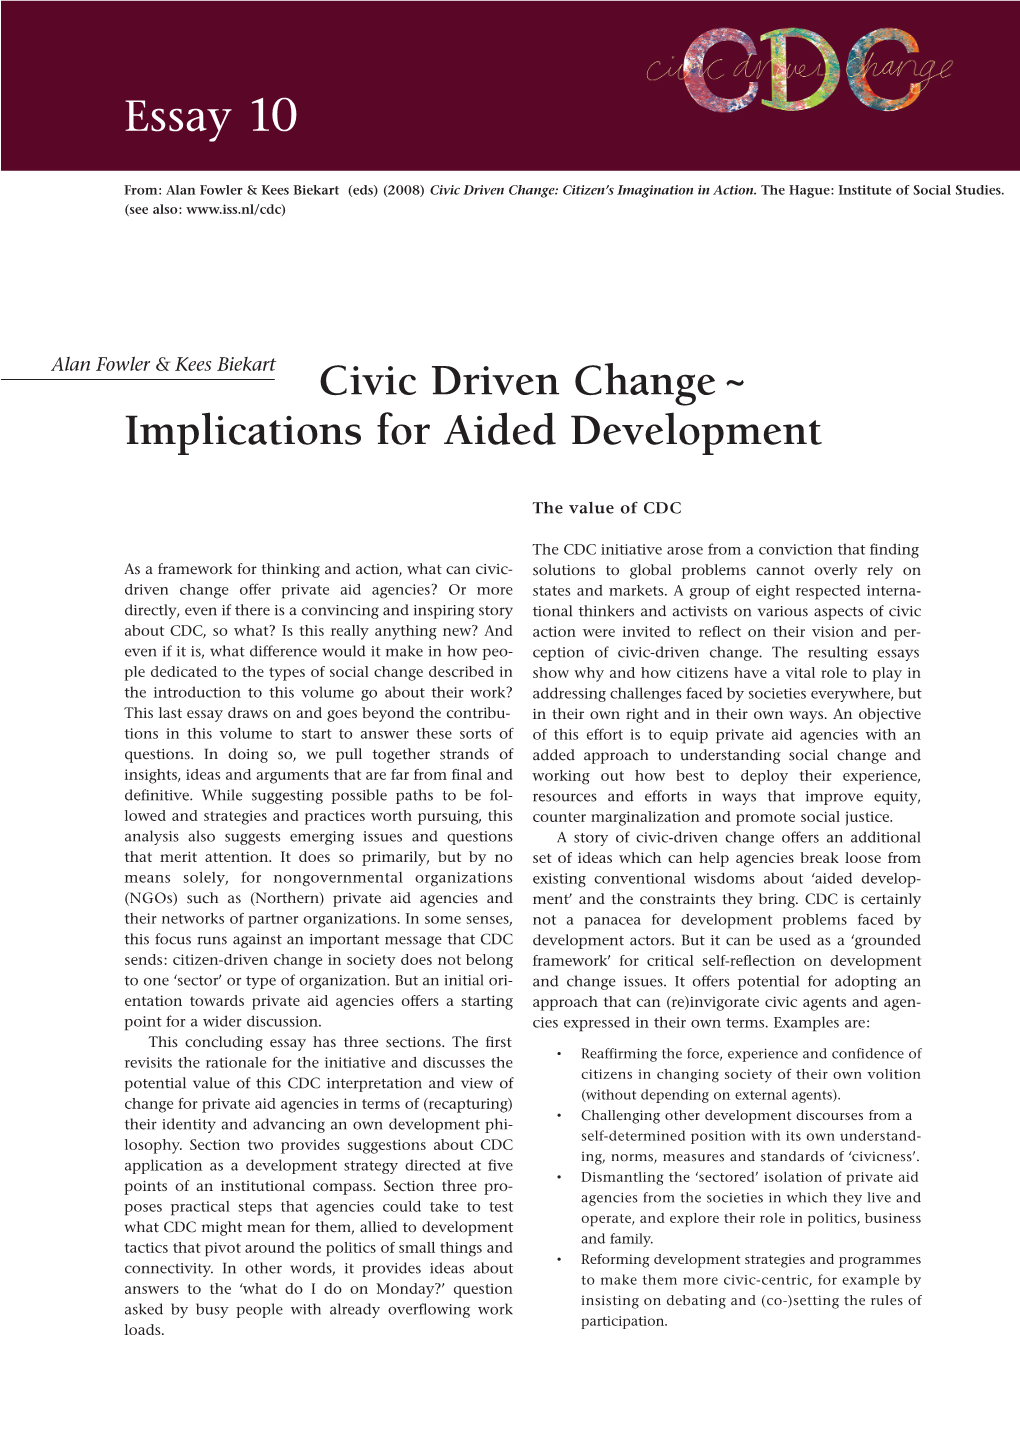 Civic Driven Change: Citizen’S Imagination in Action